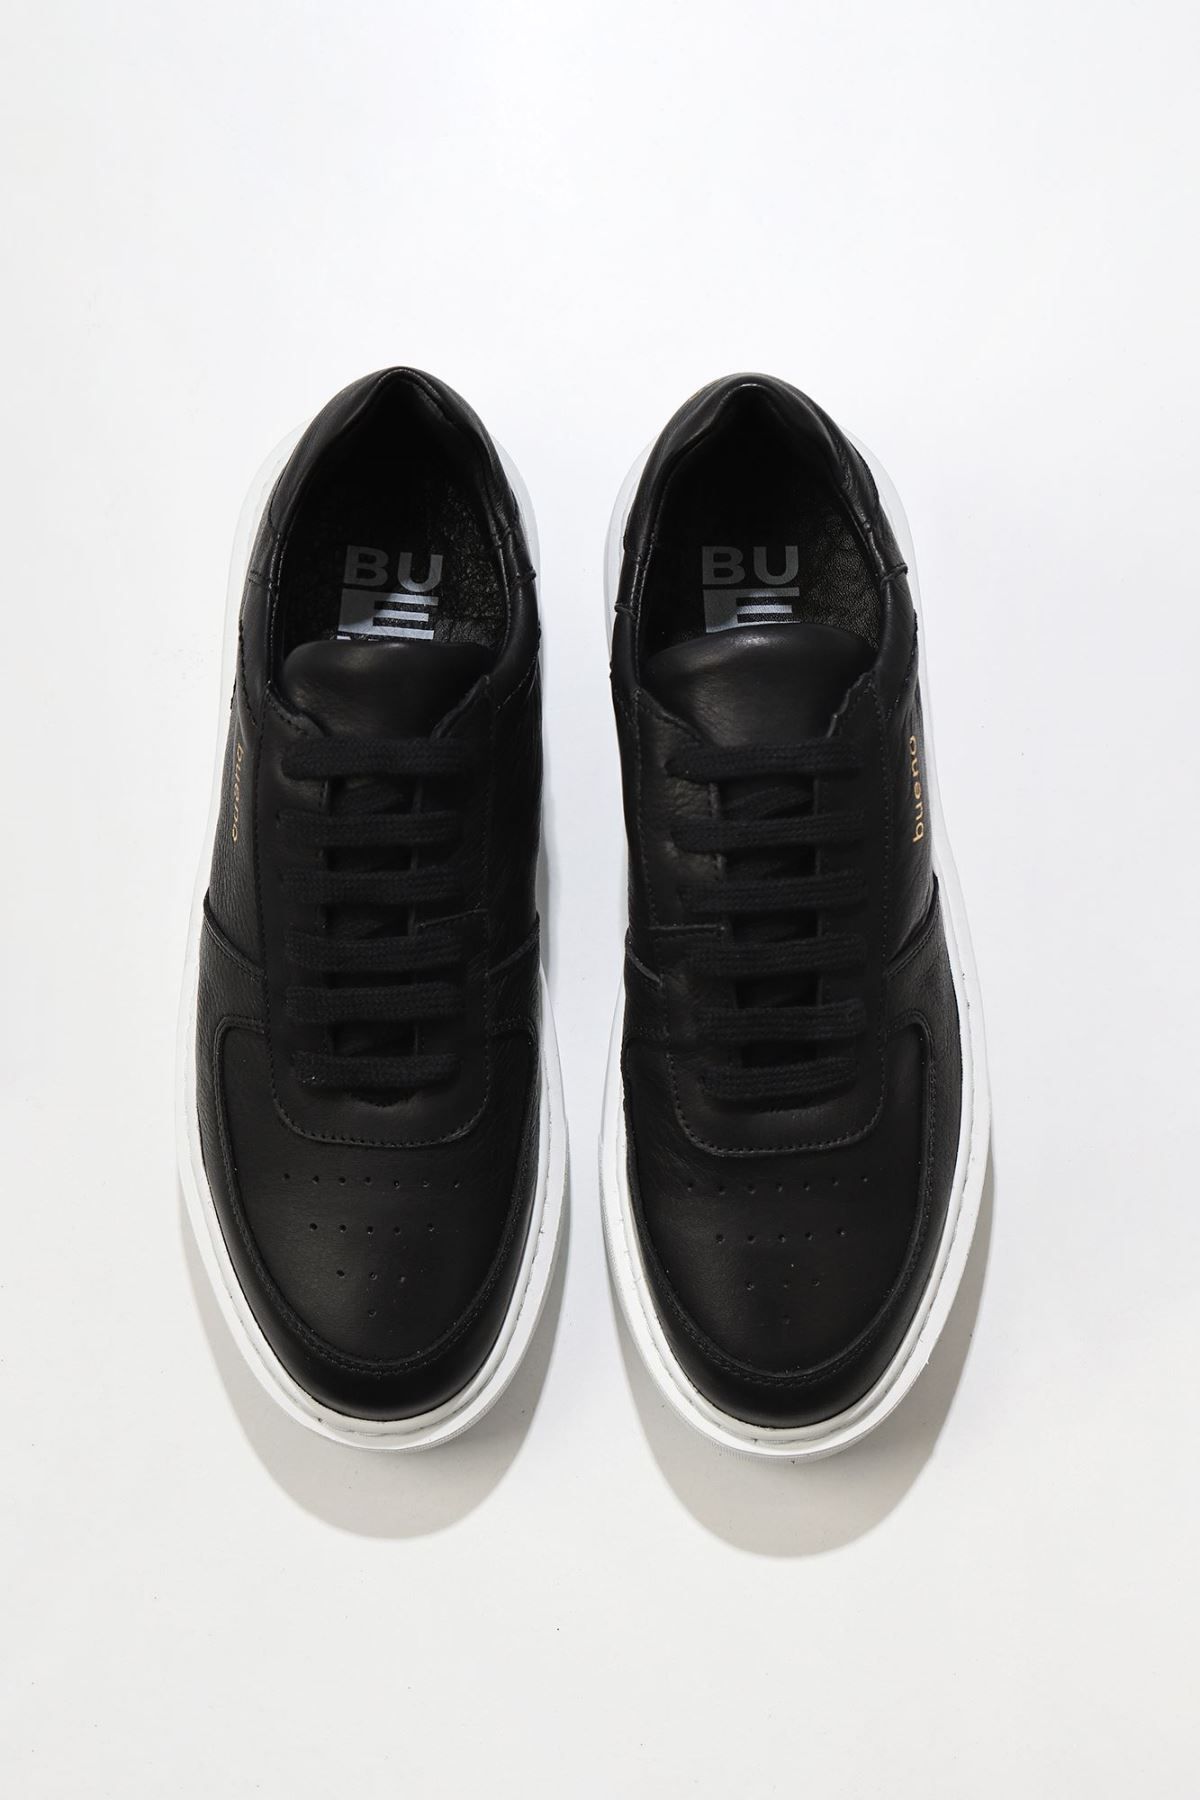 Bueno Shoes Siyah Flotter Deri Erkek Spor Ayakkabı